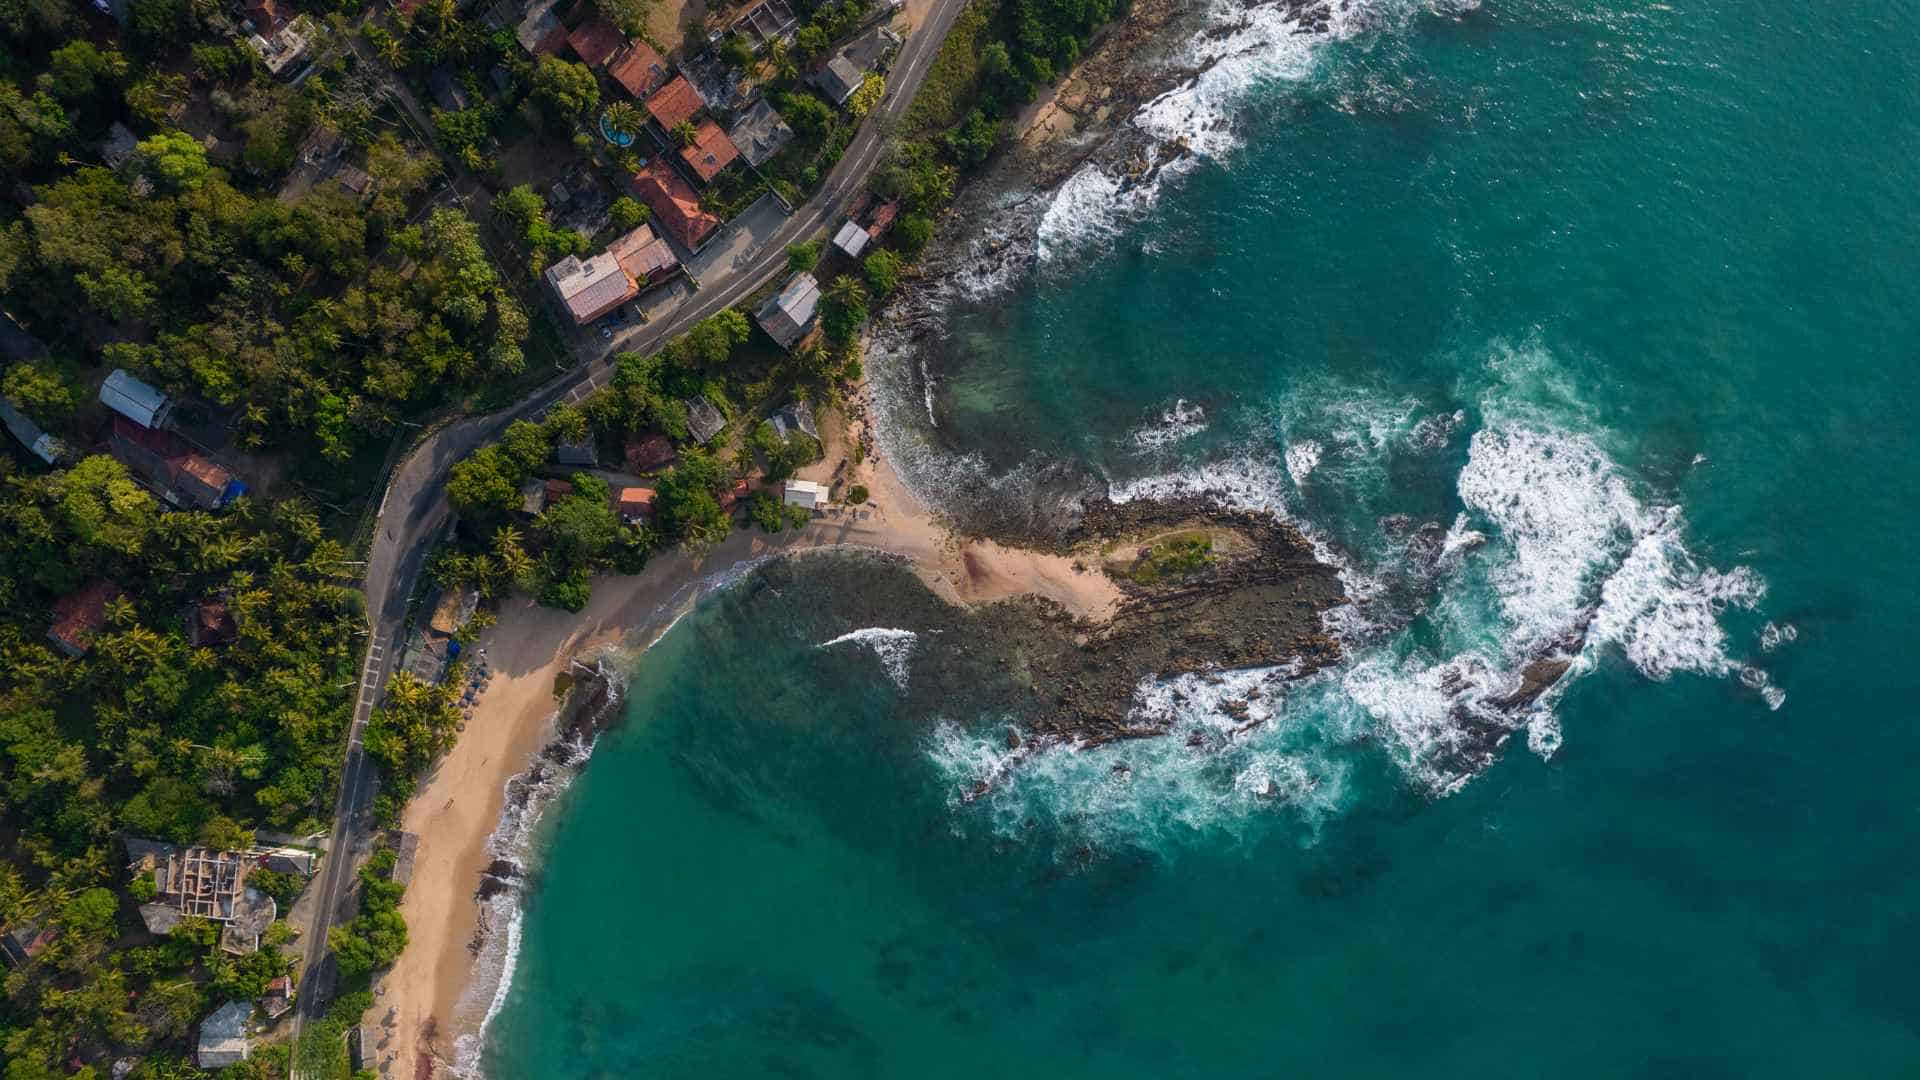 A drone view of Tangalle beach, Sri Lanka